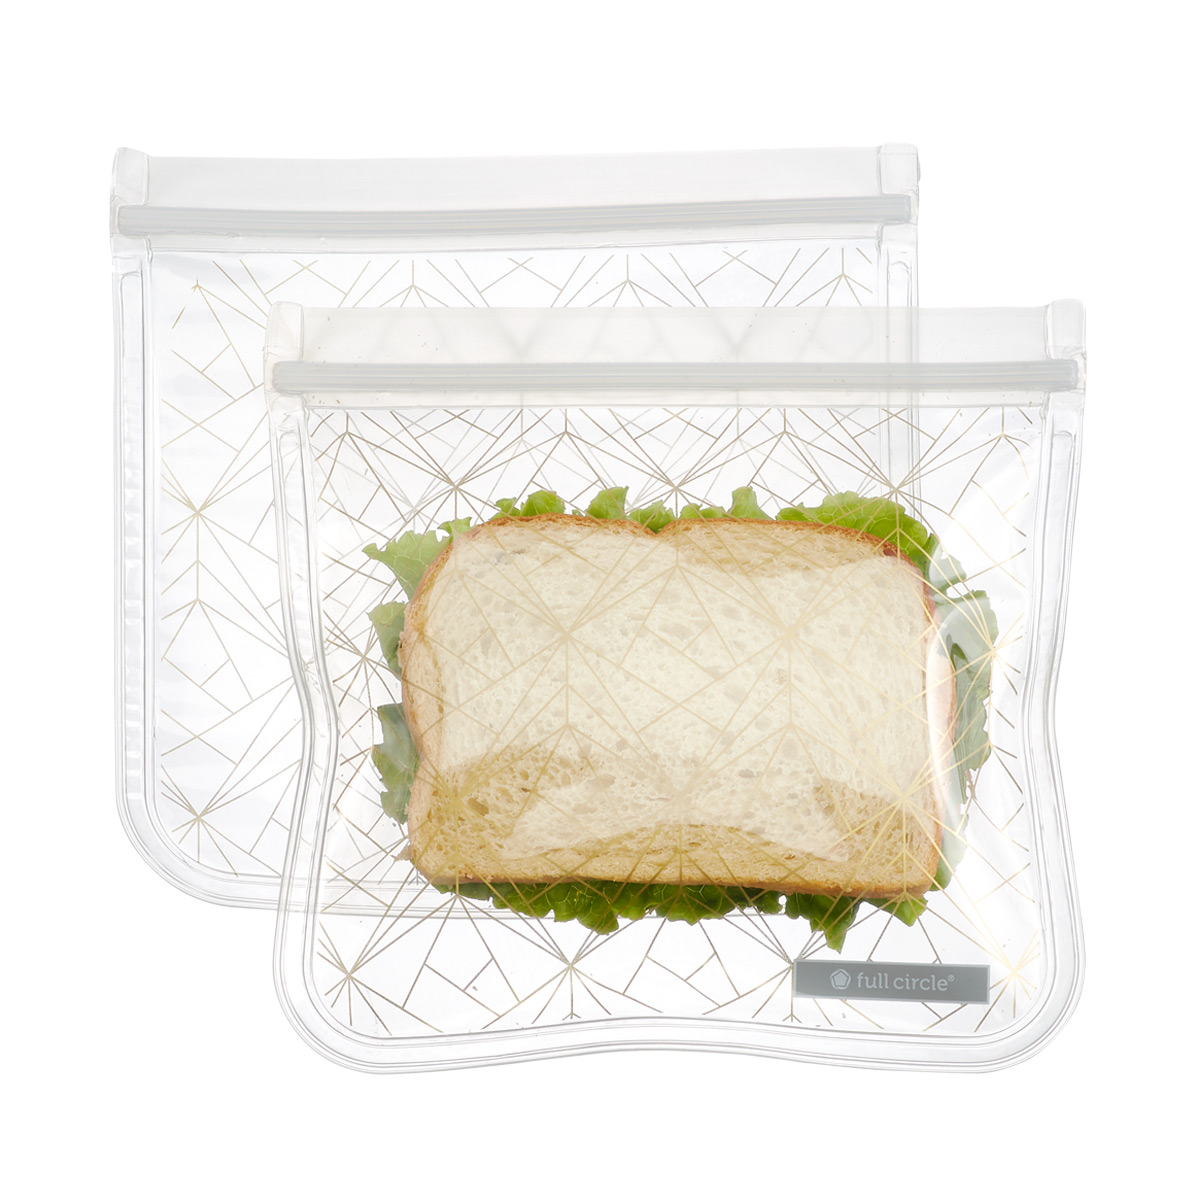 Reusable sandwich baggies and garden pix - penny carnival